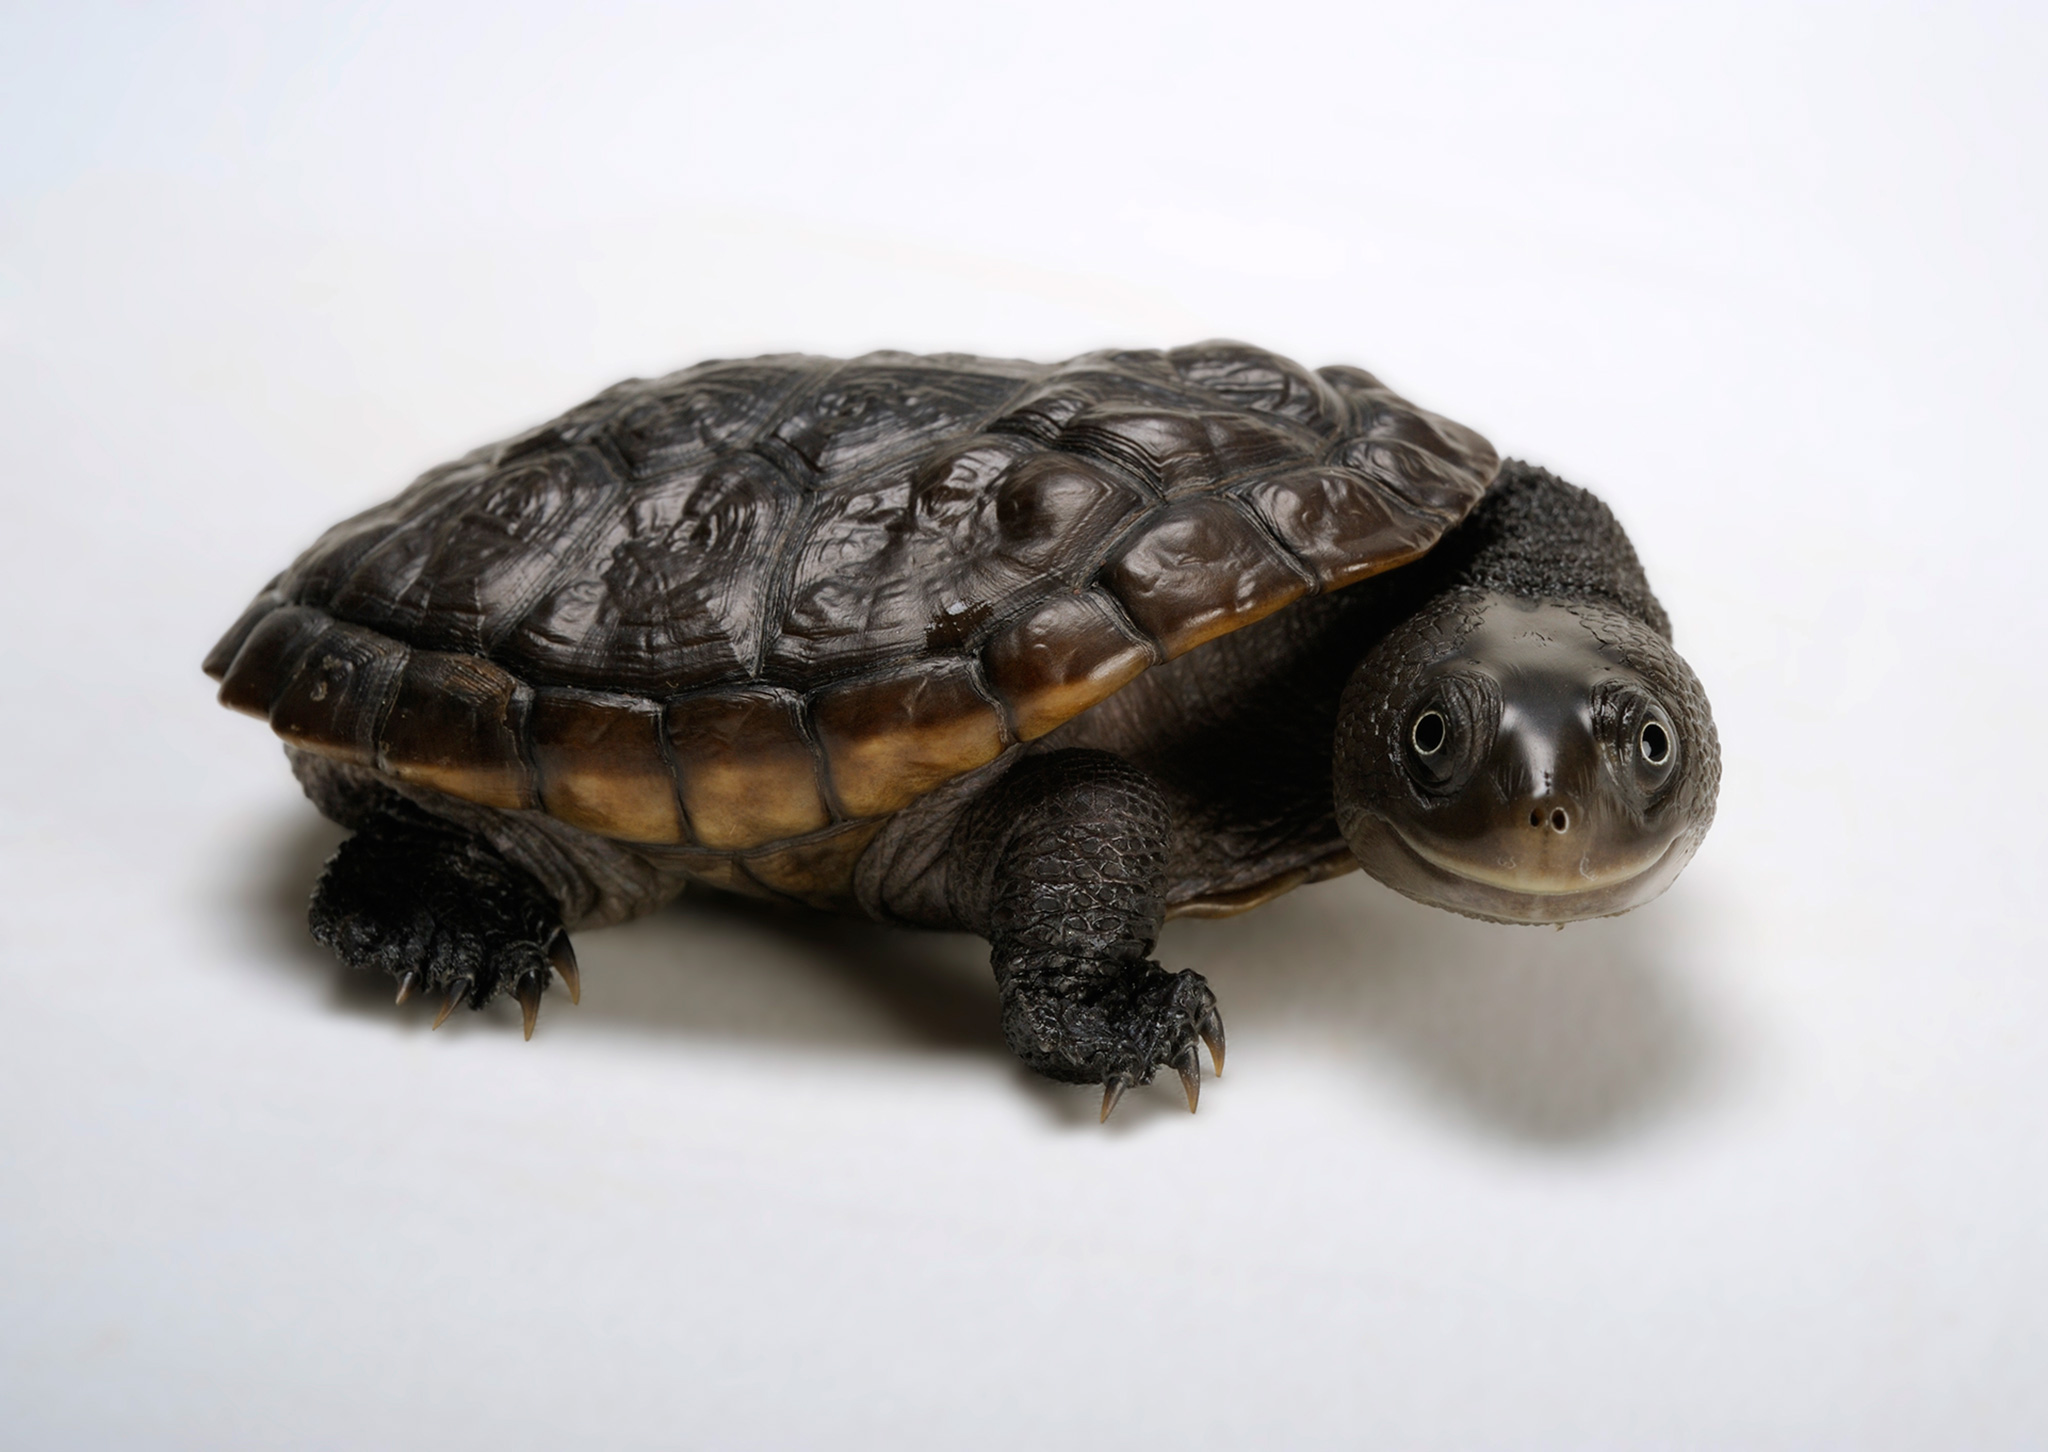 17 Surprisingly Cute Photos of Turtles